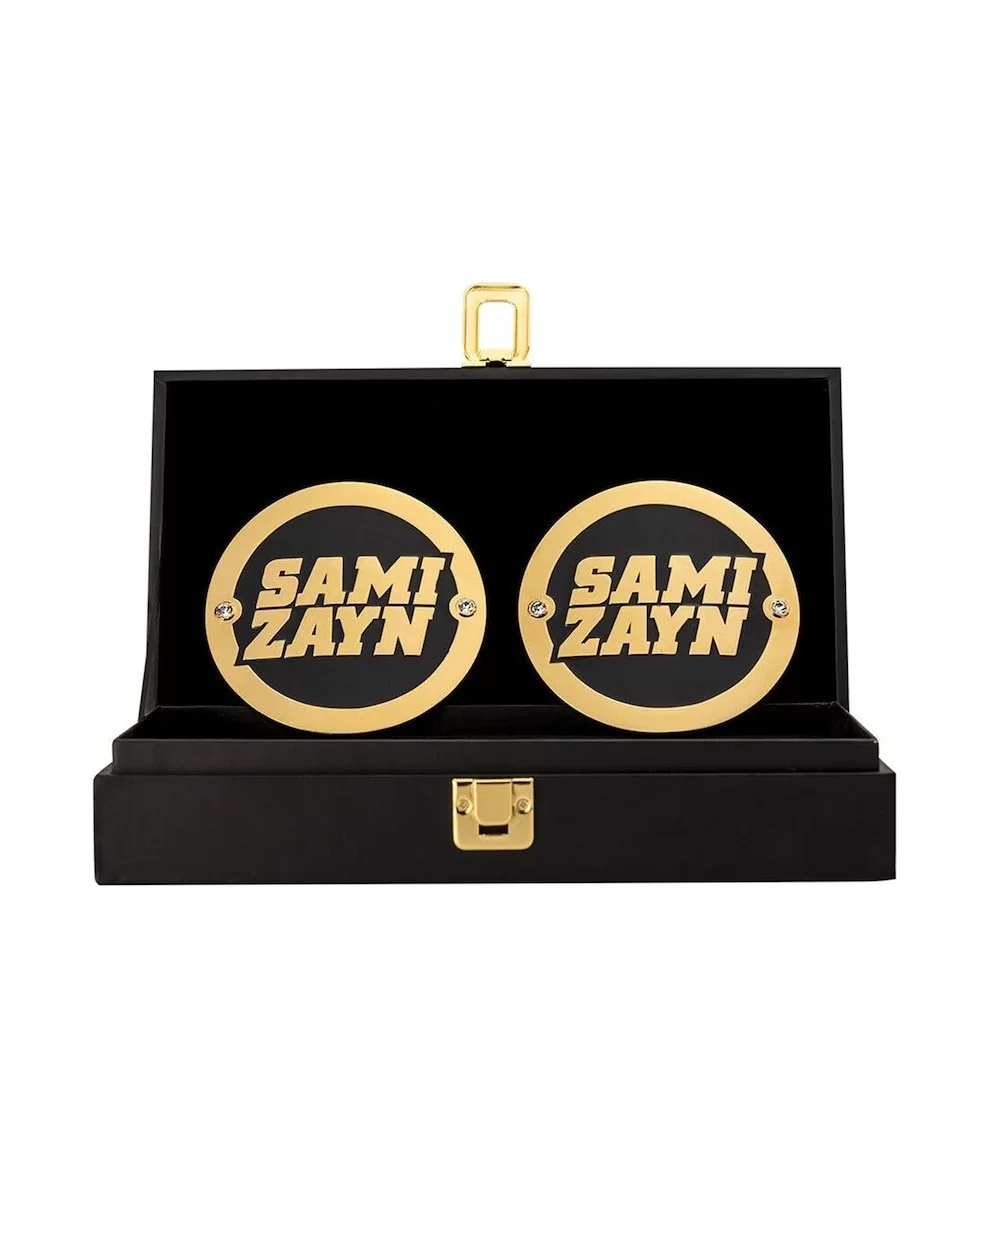 Sami Zayn Championship Replica Side Plate Box Set $24.00 Collectibles